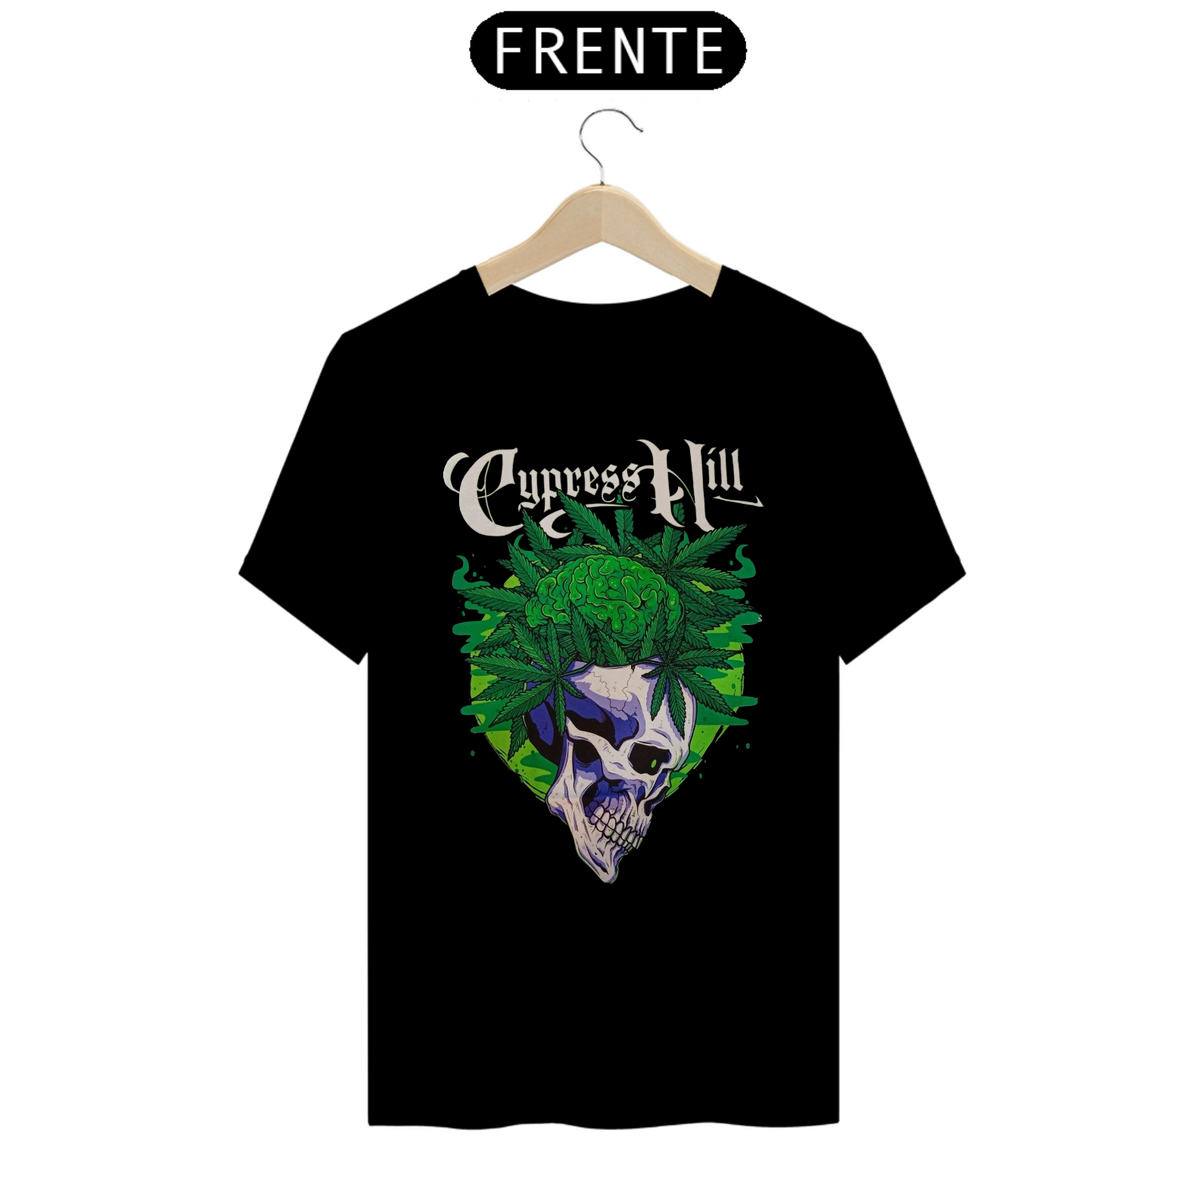 Nome do produto: Cypress Hill